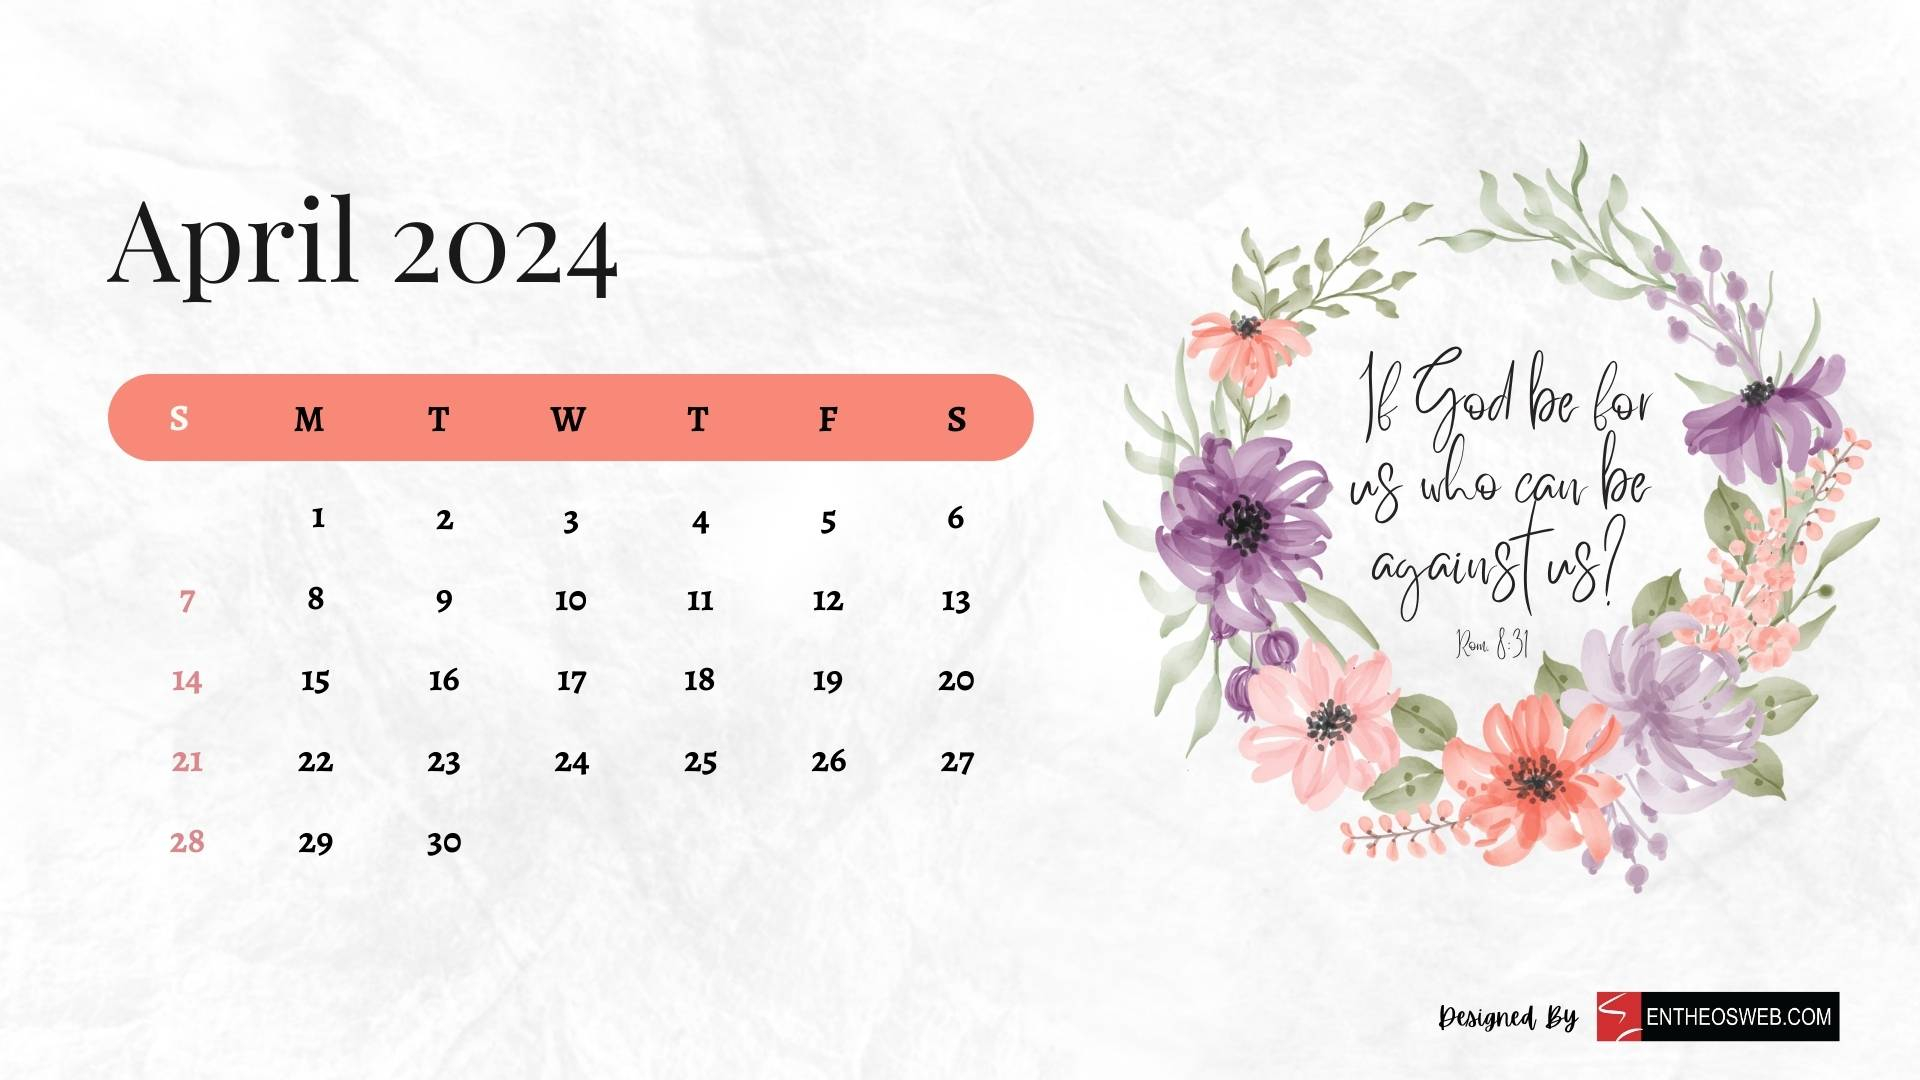 2024 Christian Calendar Wallpaper | Entheosweb in April 2024 Calendar Wallpaper